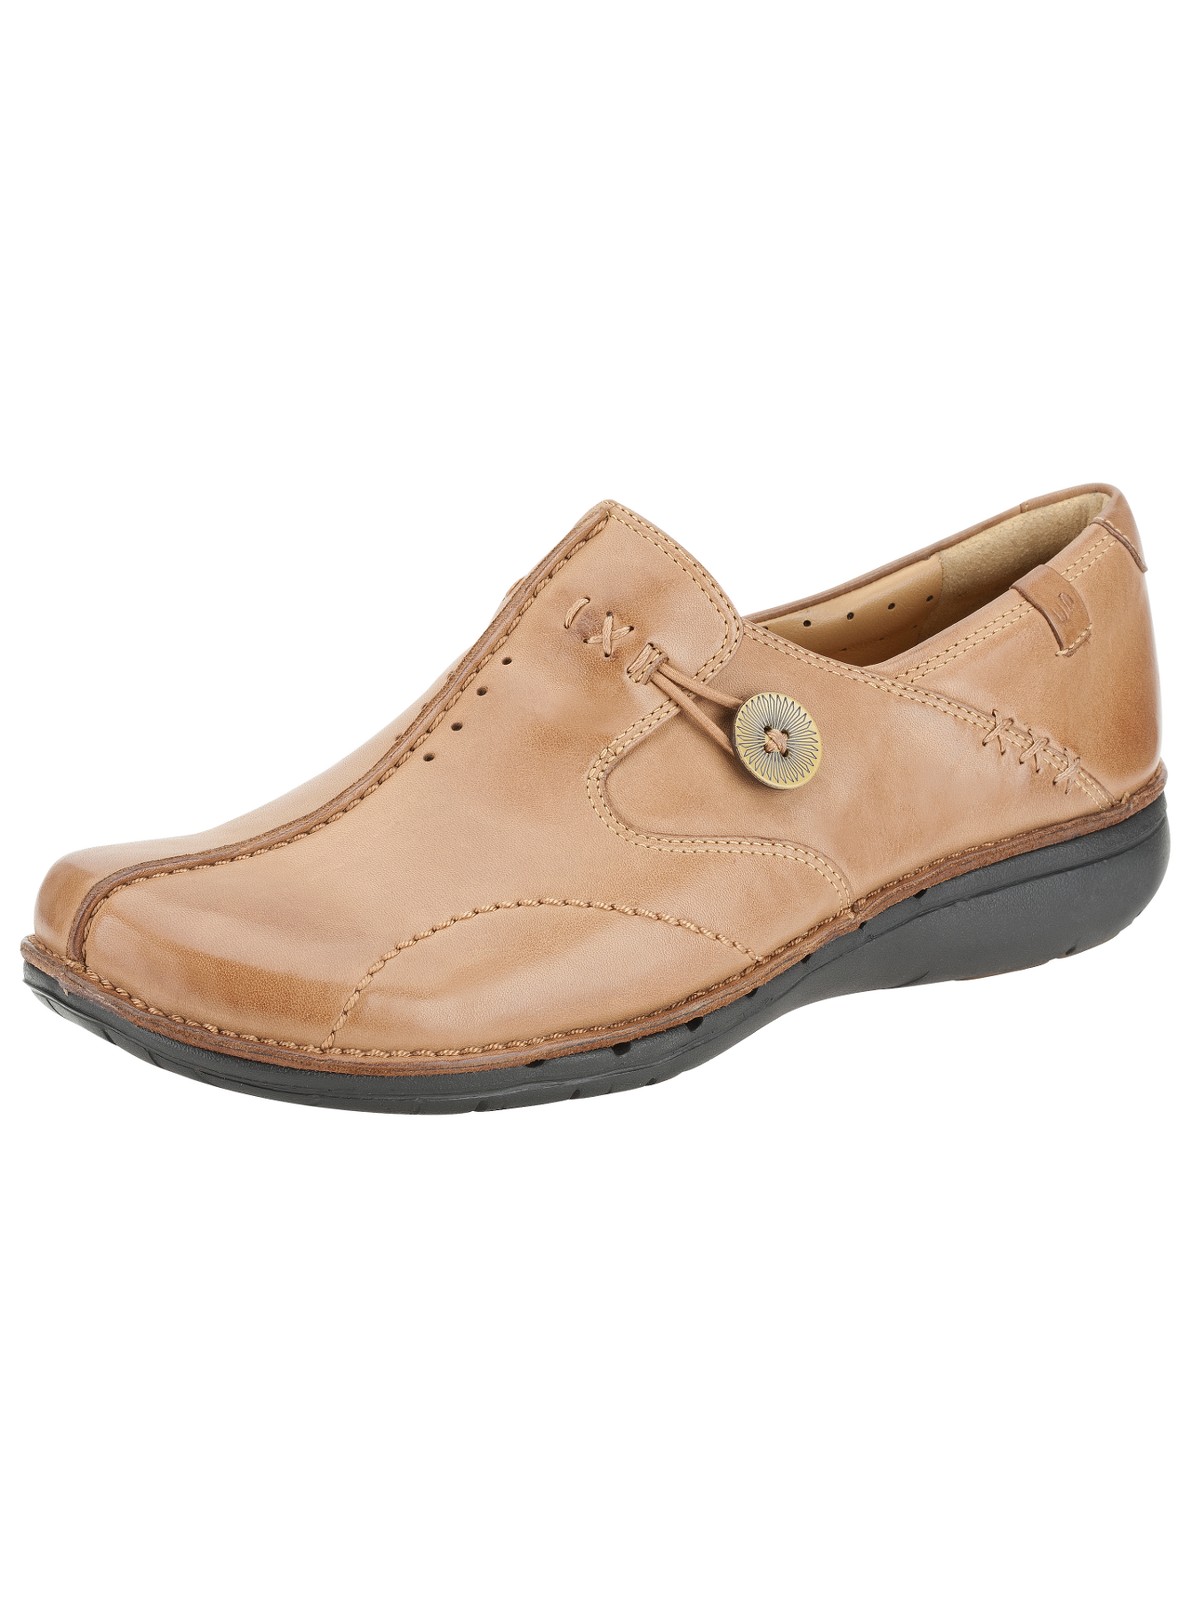 Clarks Clarks Un Loop Leather Shoes in Beige for Men (light_tan) | Lyst